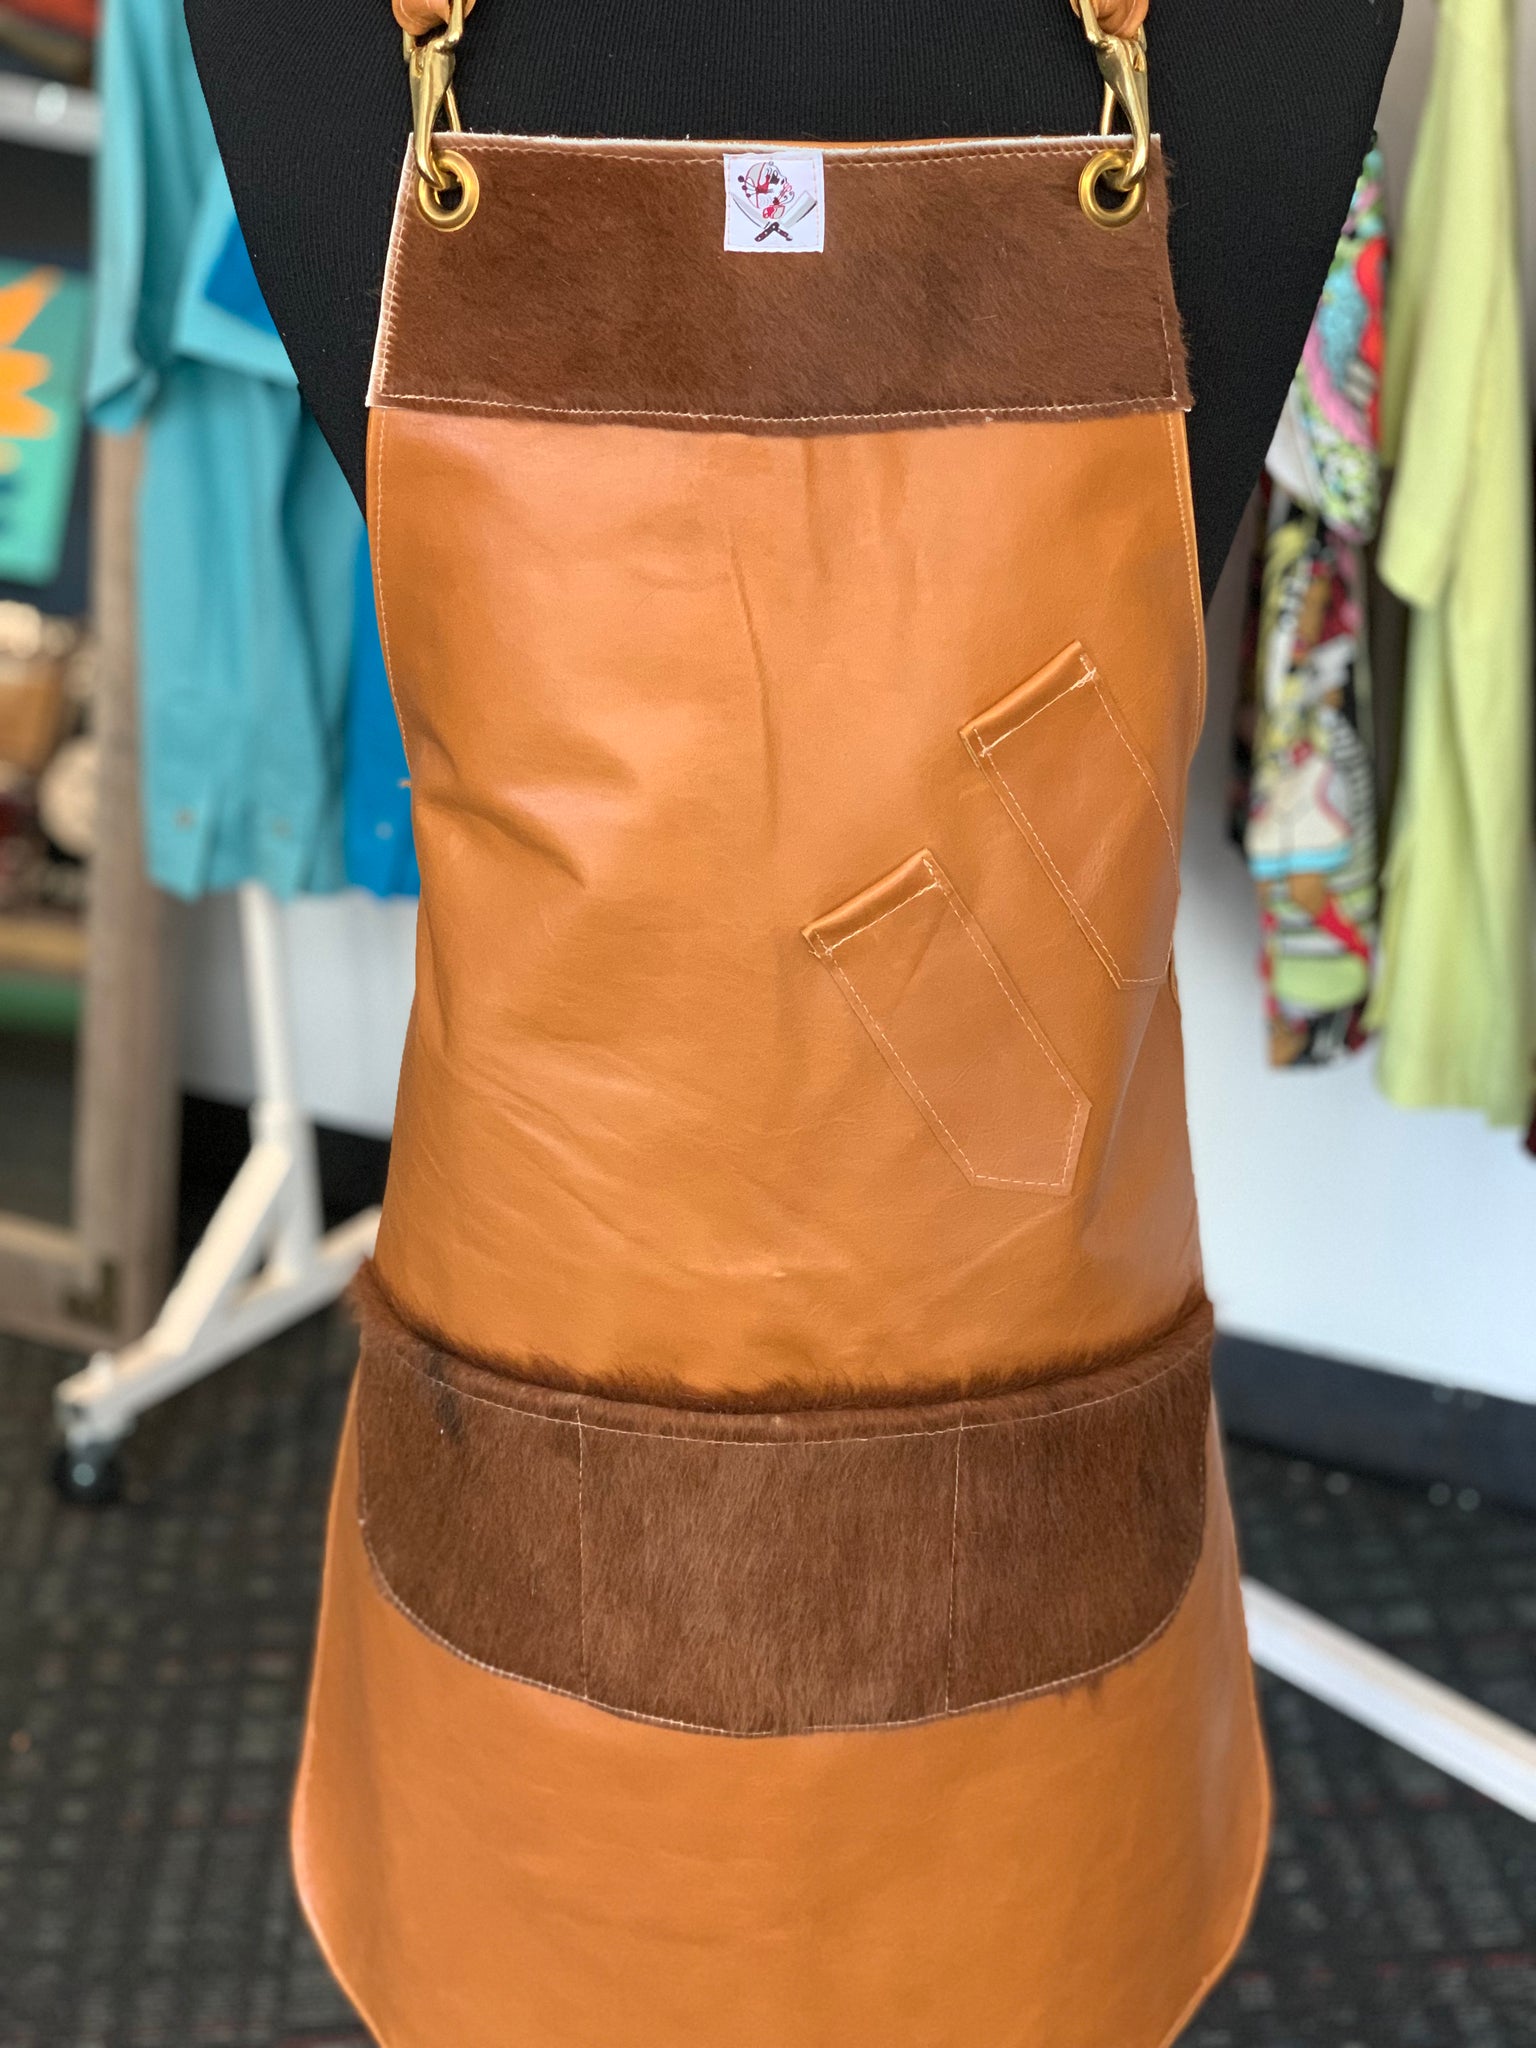 The Texan leather apron